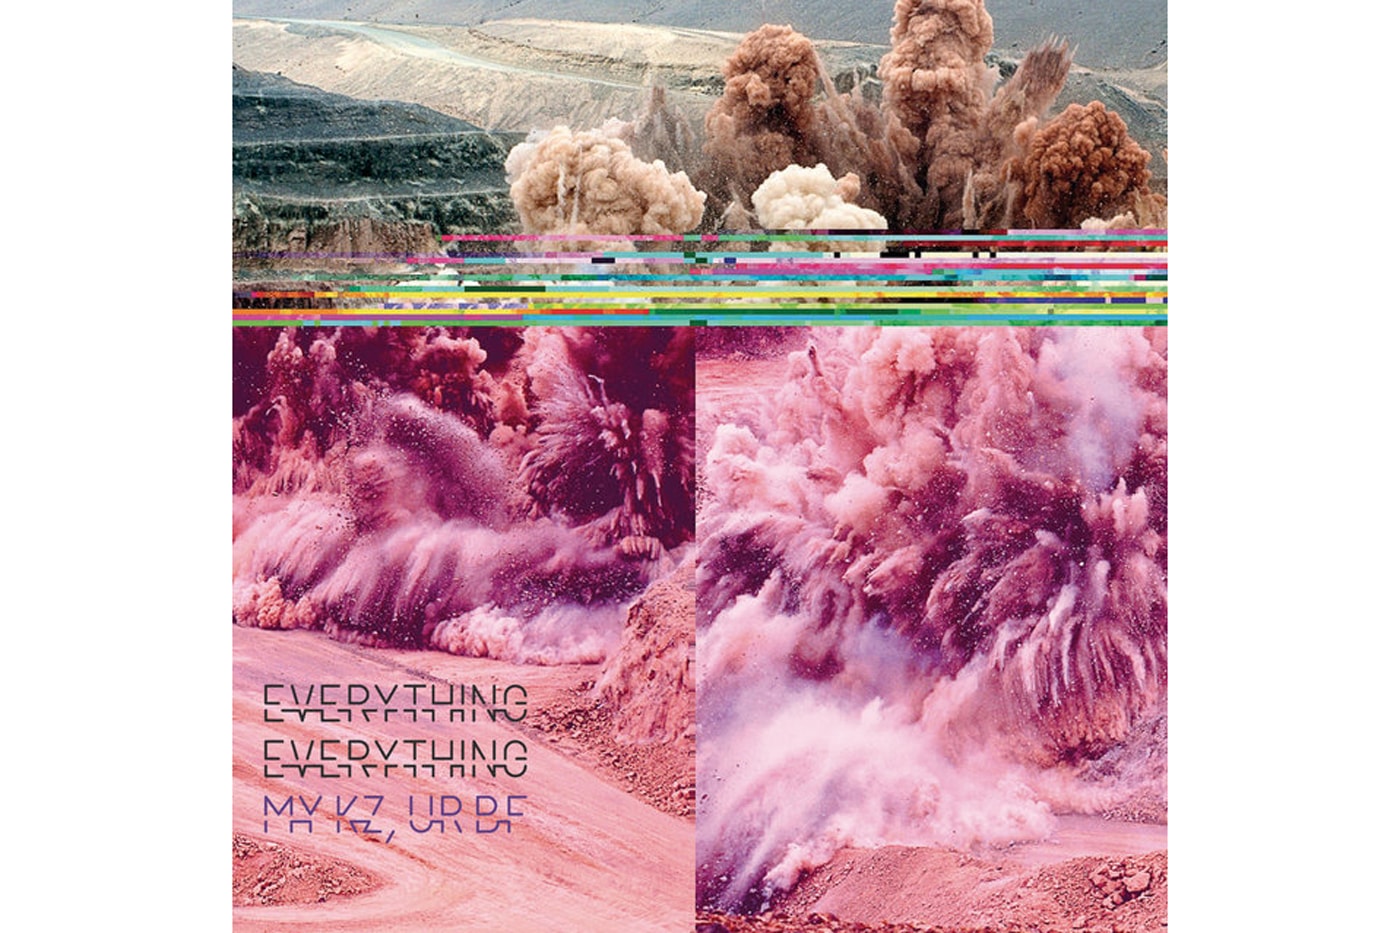 Everything Everything – MY KZ, UR BF (Grum Remix)